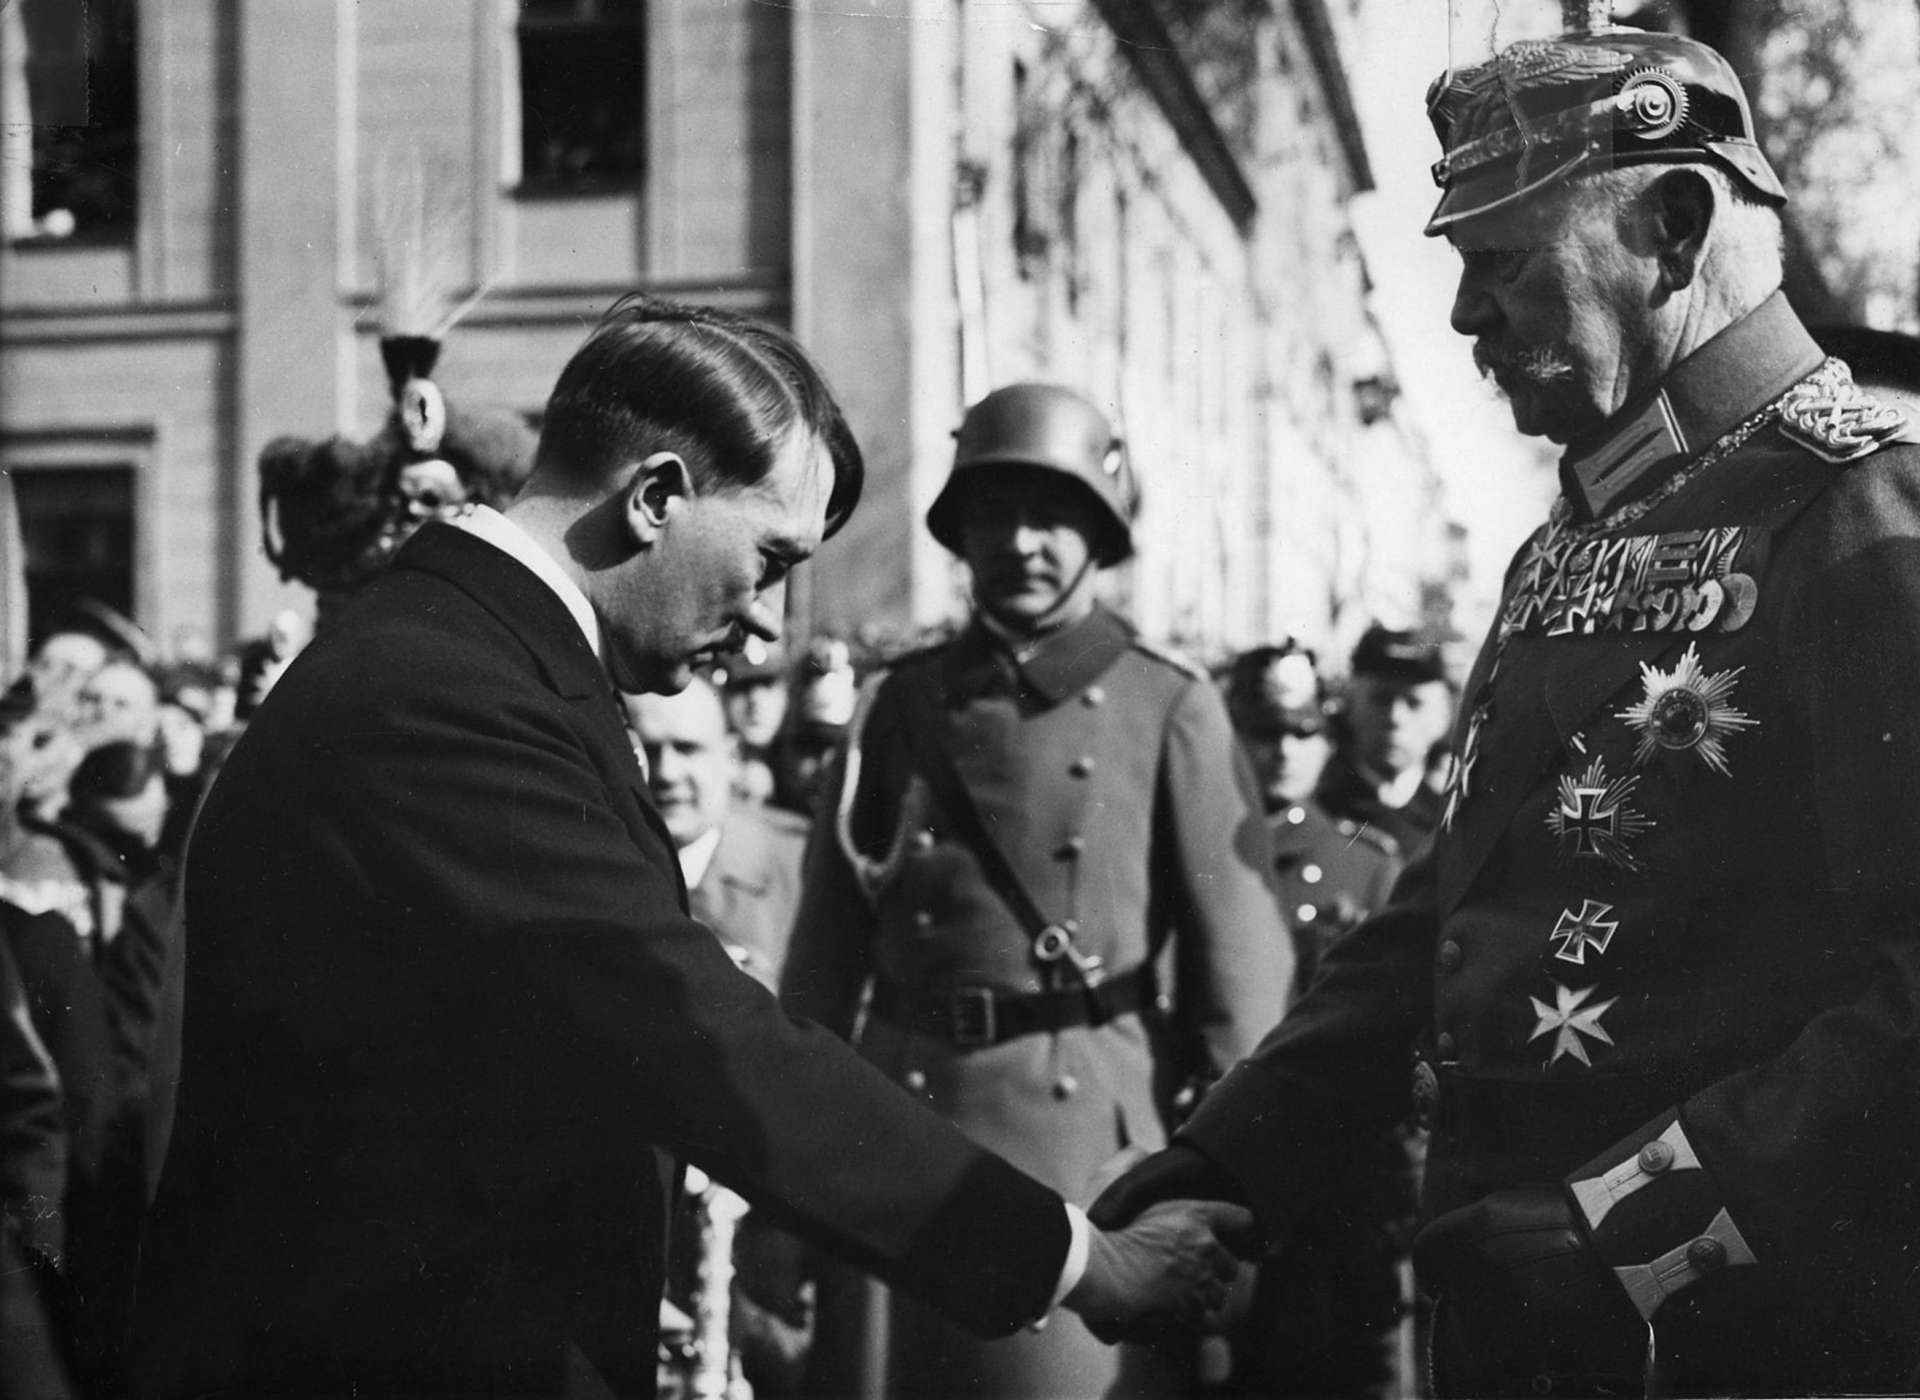 Hitler and the kaiser, WWII-era